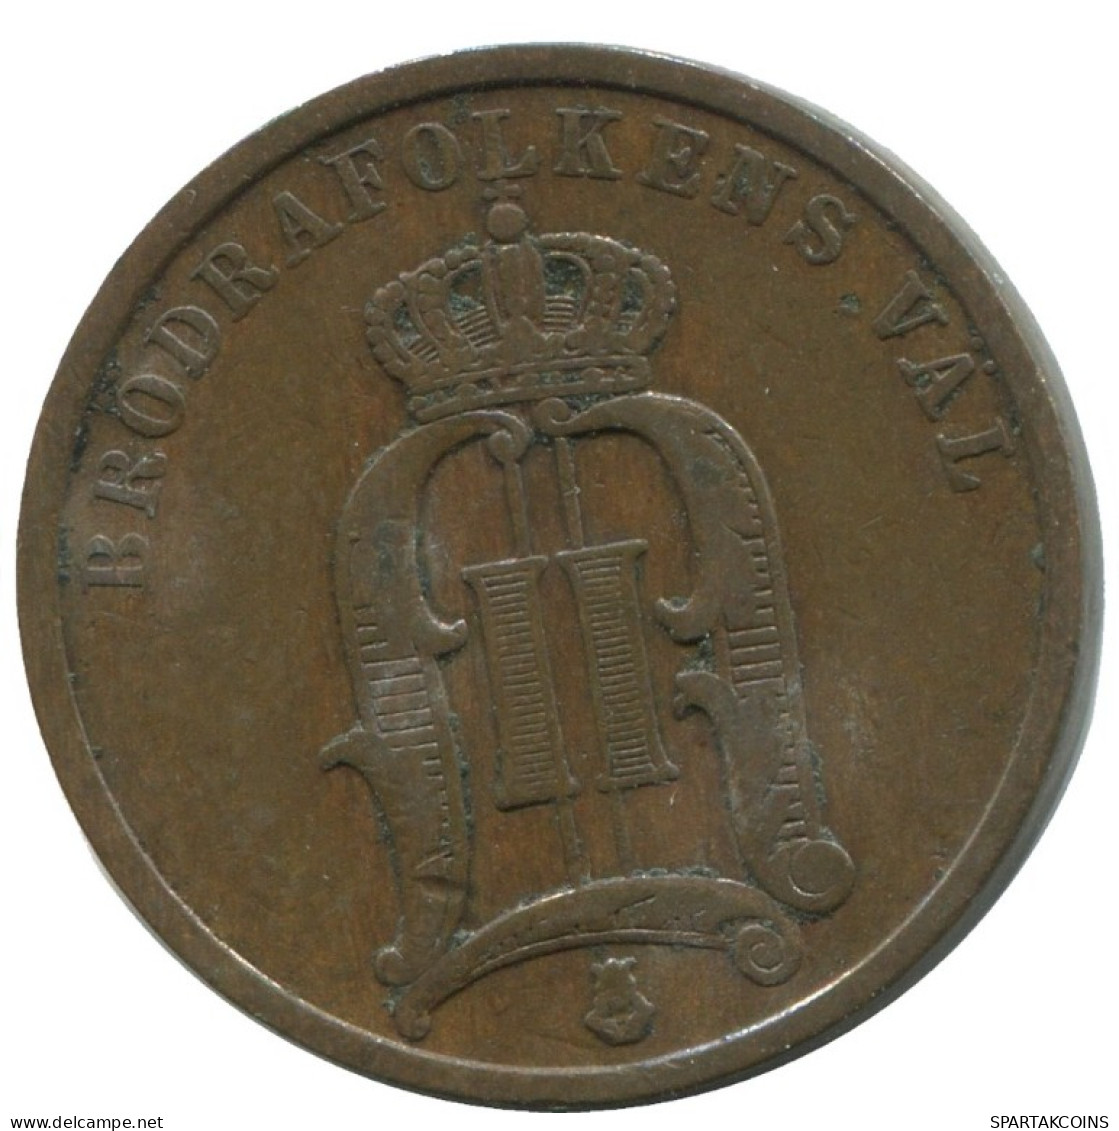 2 ORE 1901 SWEDEN Coin #AC958.2.U.A - Sweden